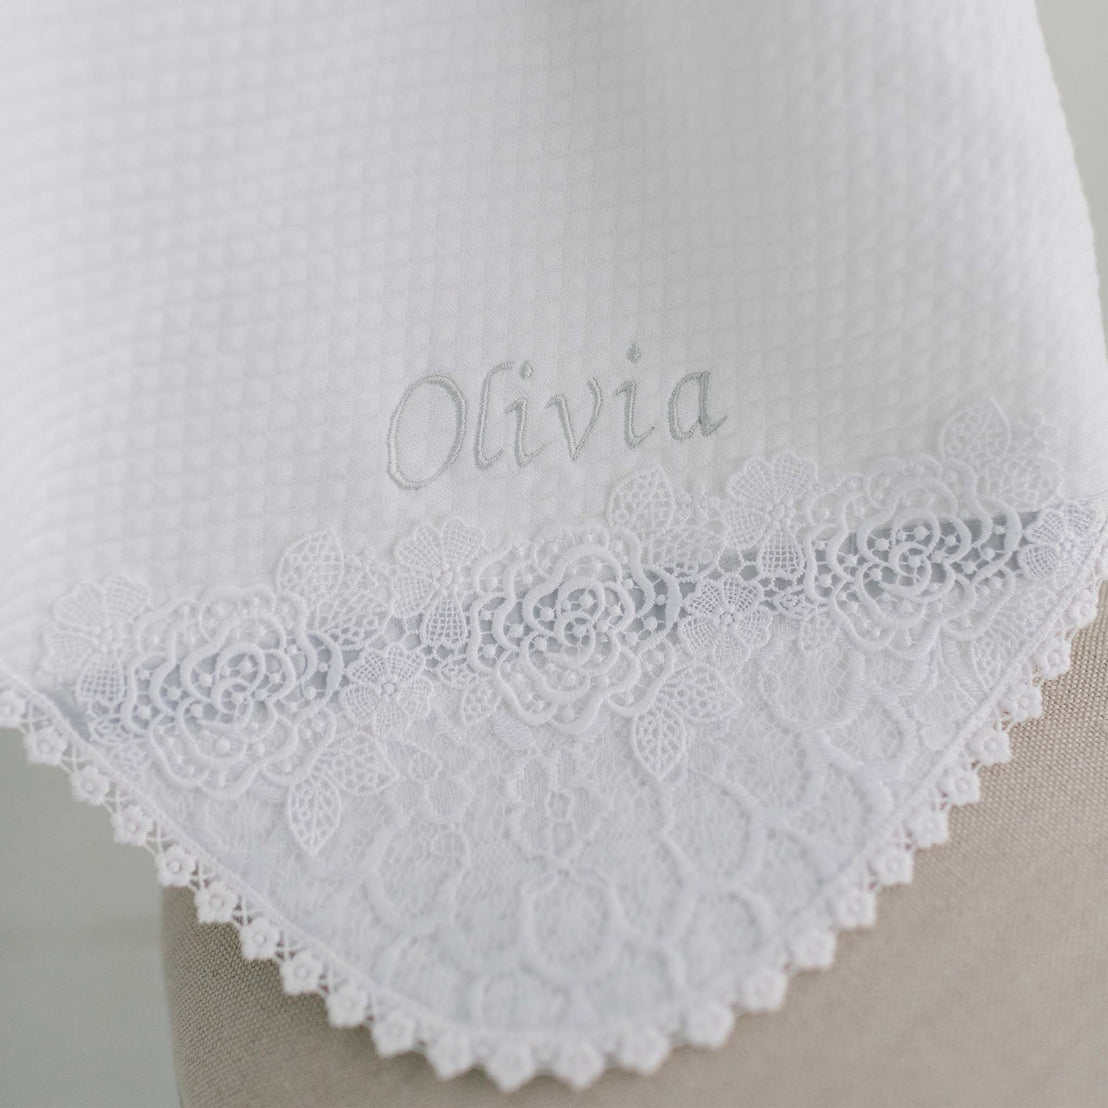 Olivia Personalized Blanket